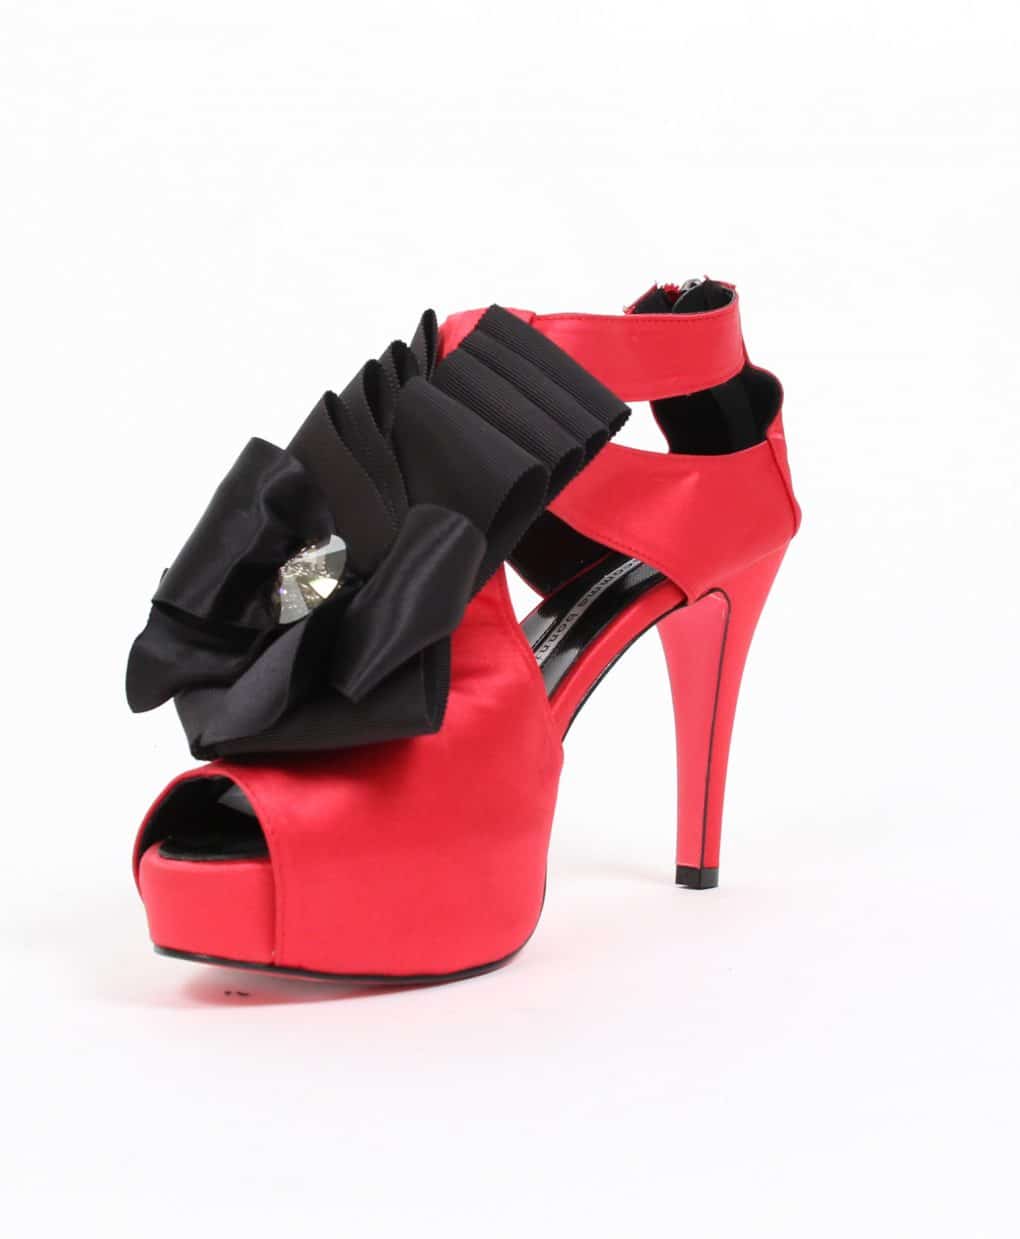 Red-black-platform-swarovski-heels-suecomma-bonnie-Alila